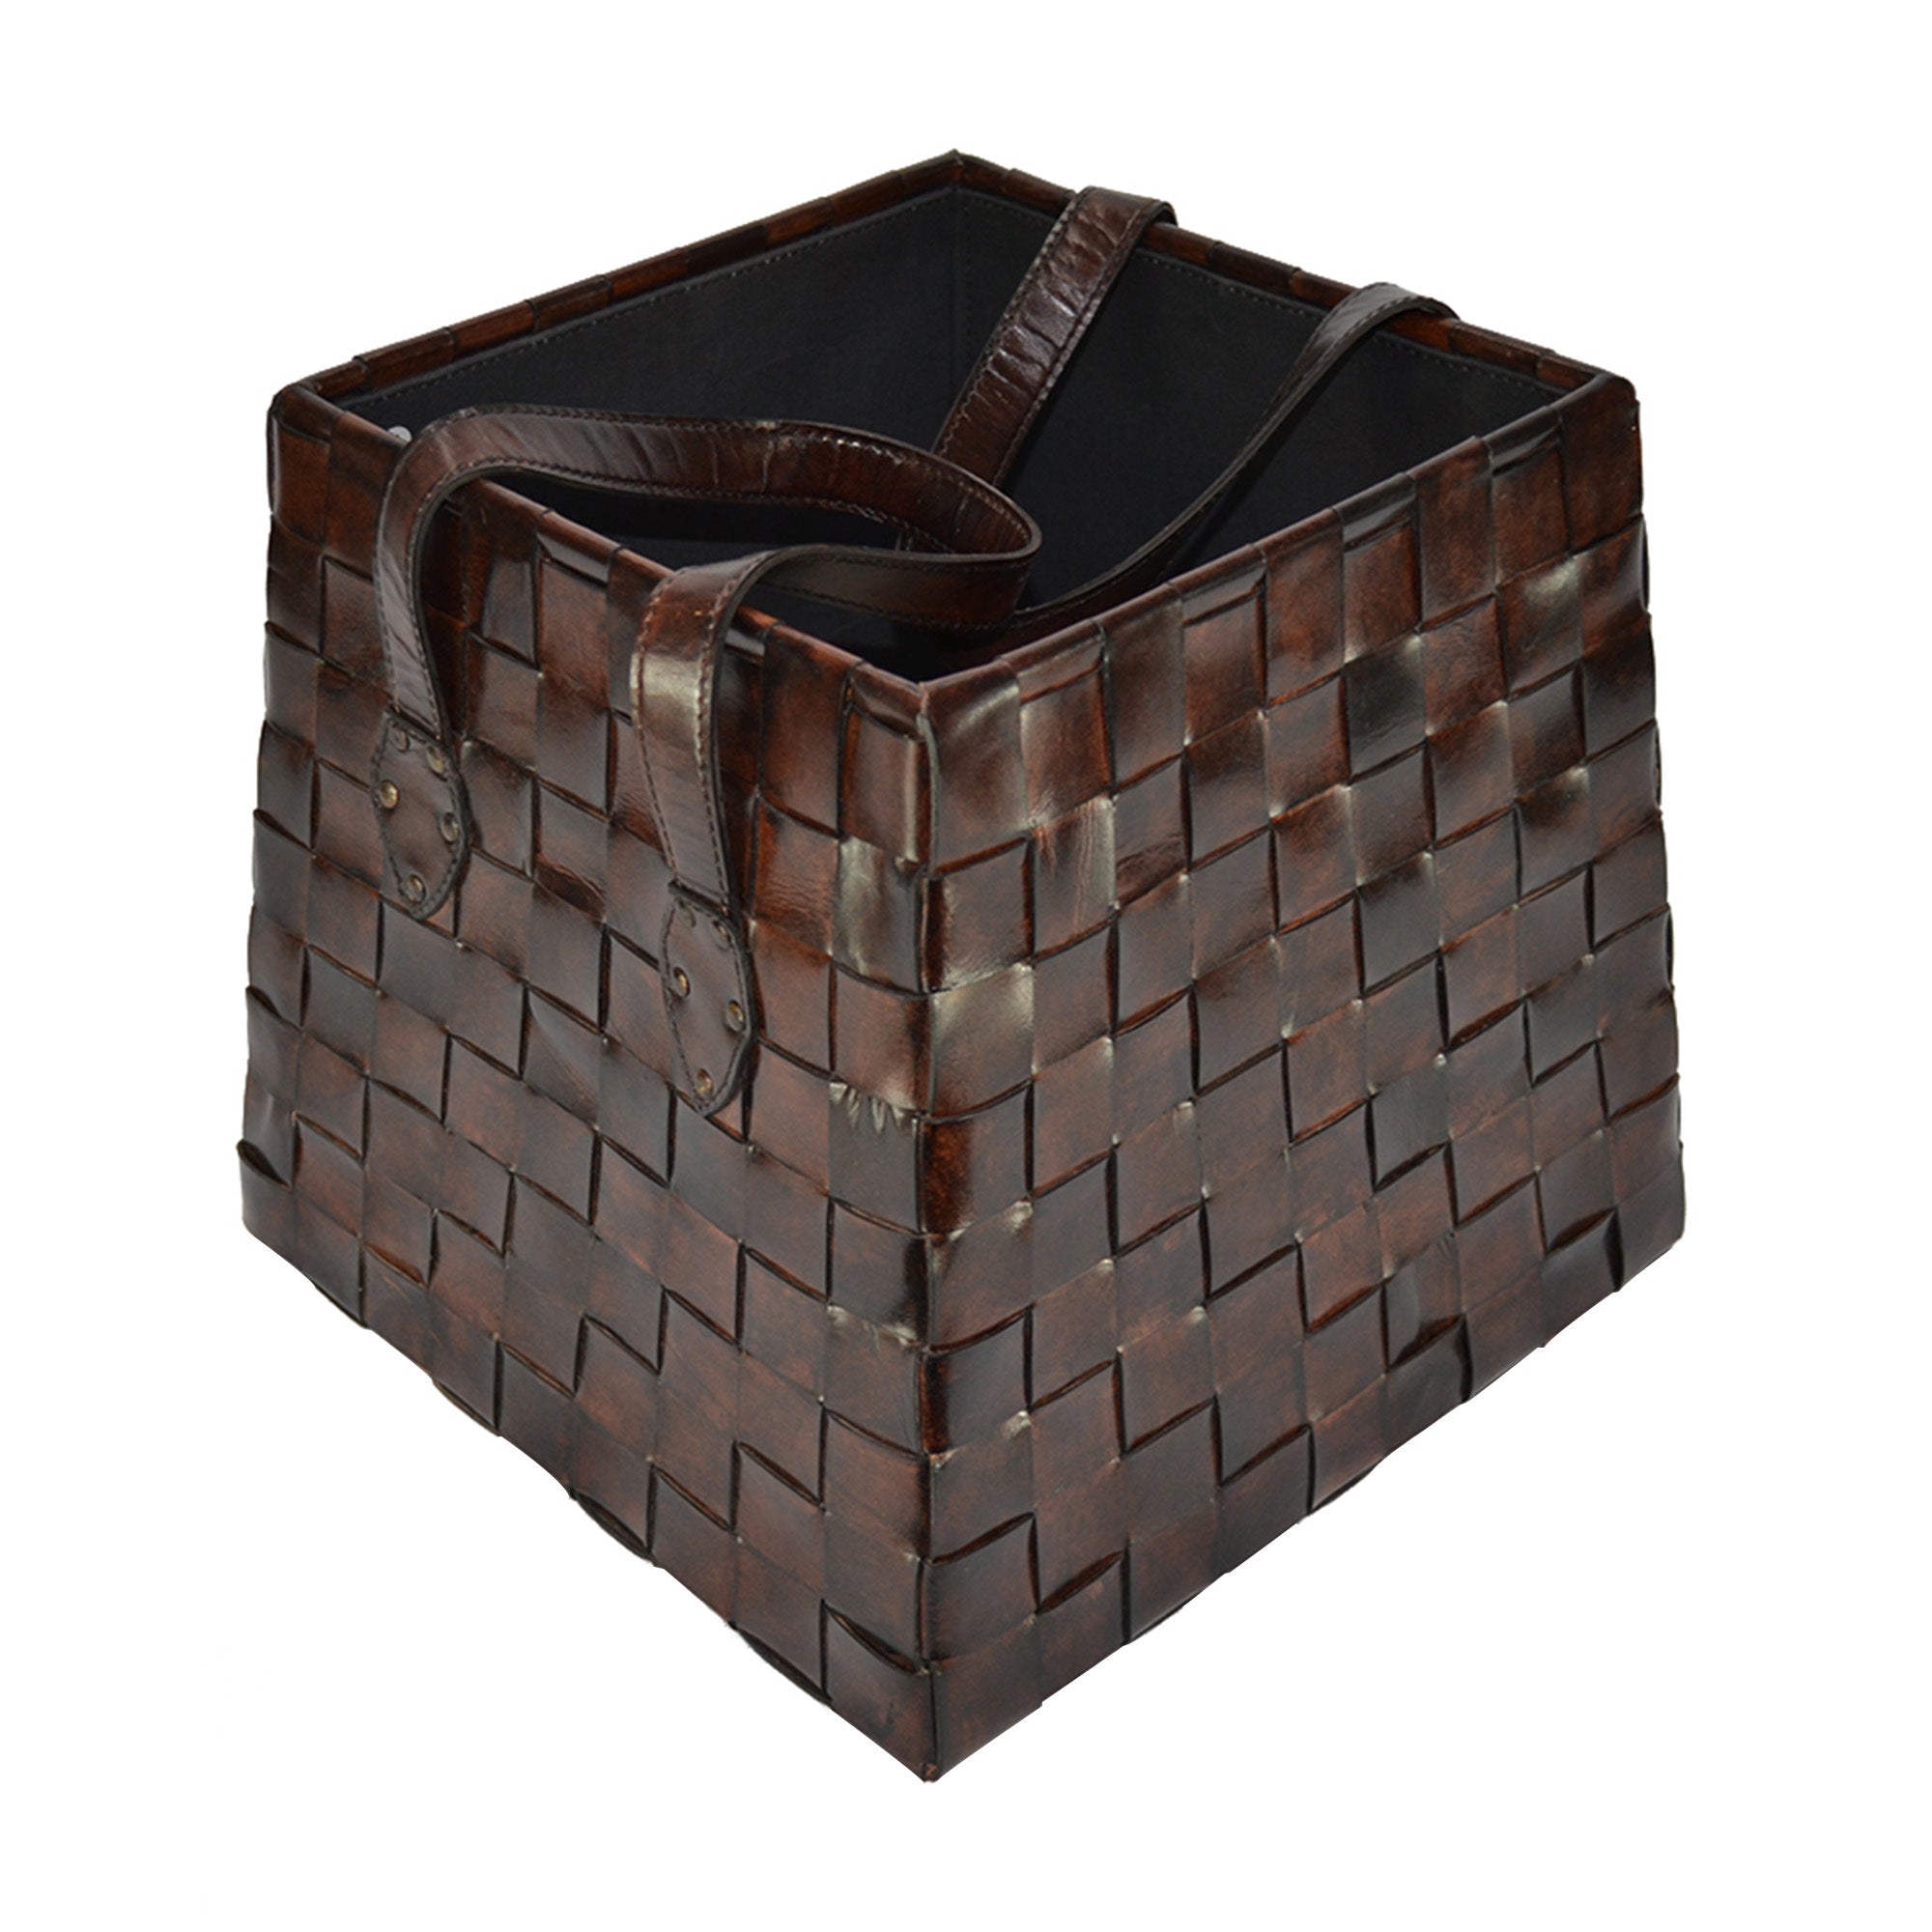 Fanciful Dark Leather Weaving Magazine Basket - Notbrand